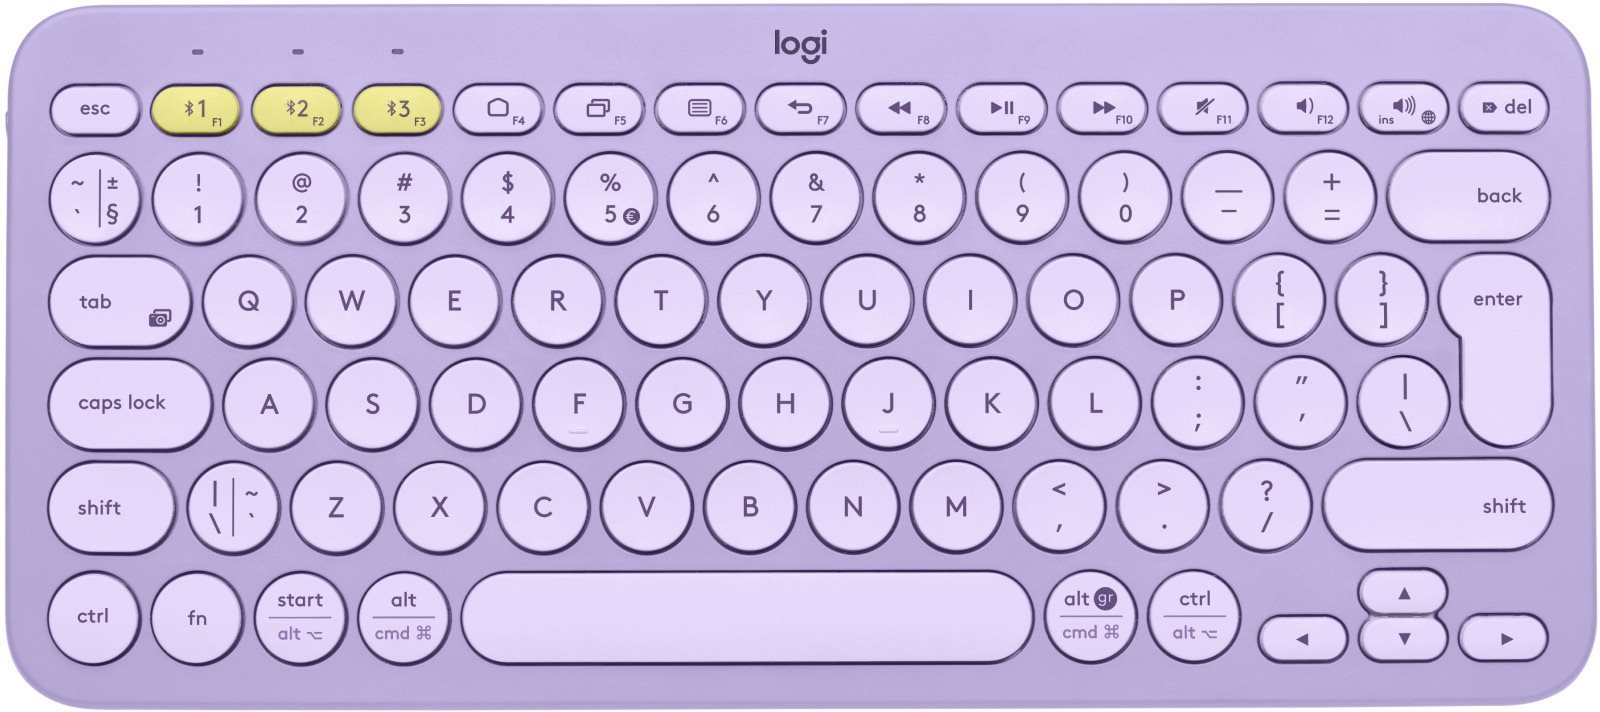 Logitech Bluetooth Multi-Device Keyboard K380, Lavender and Lemonade - US INTL